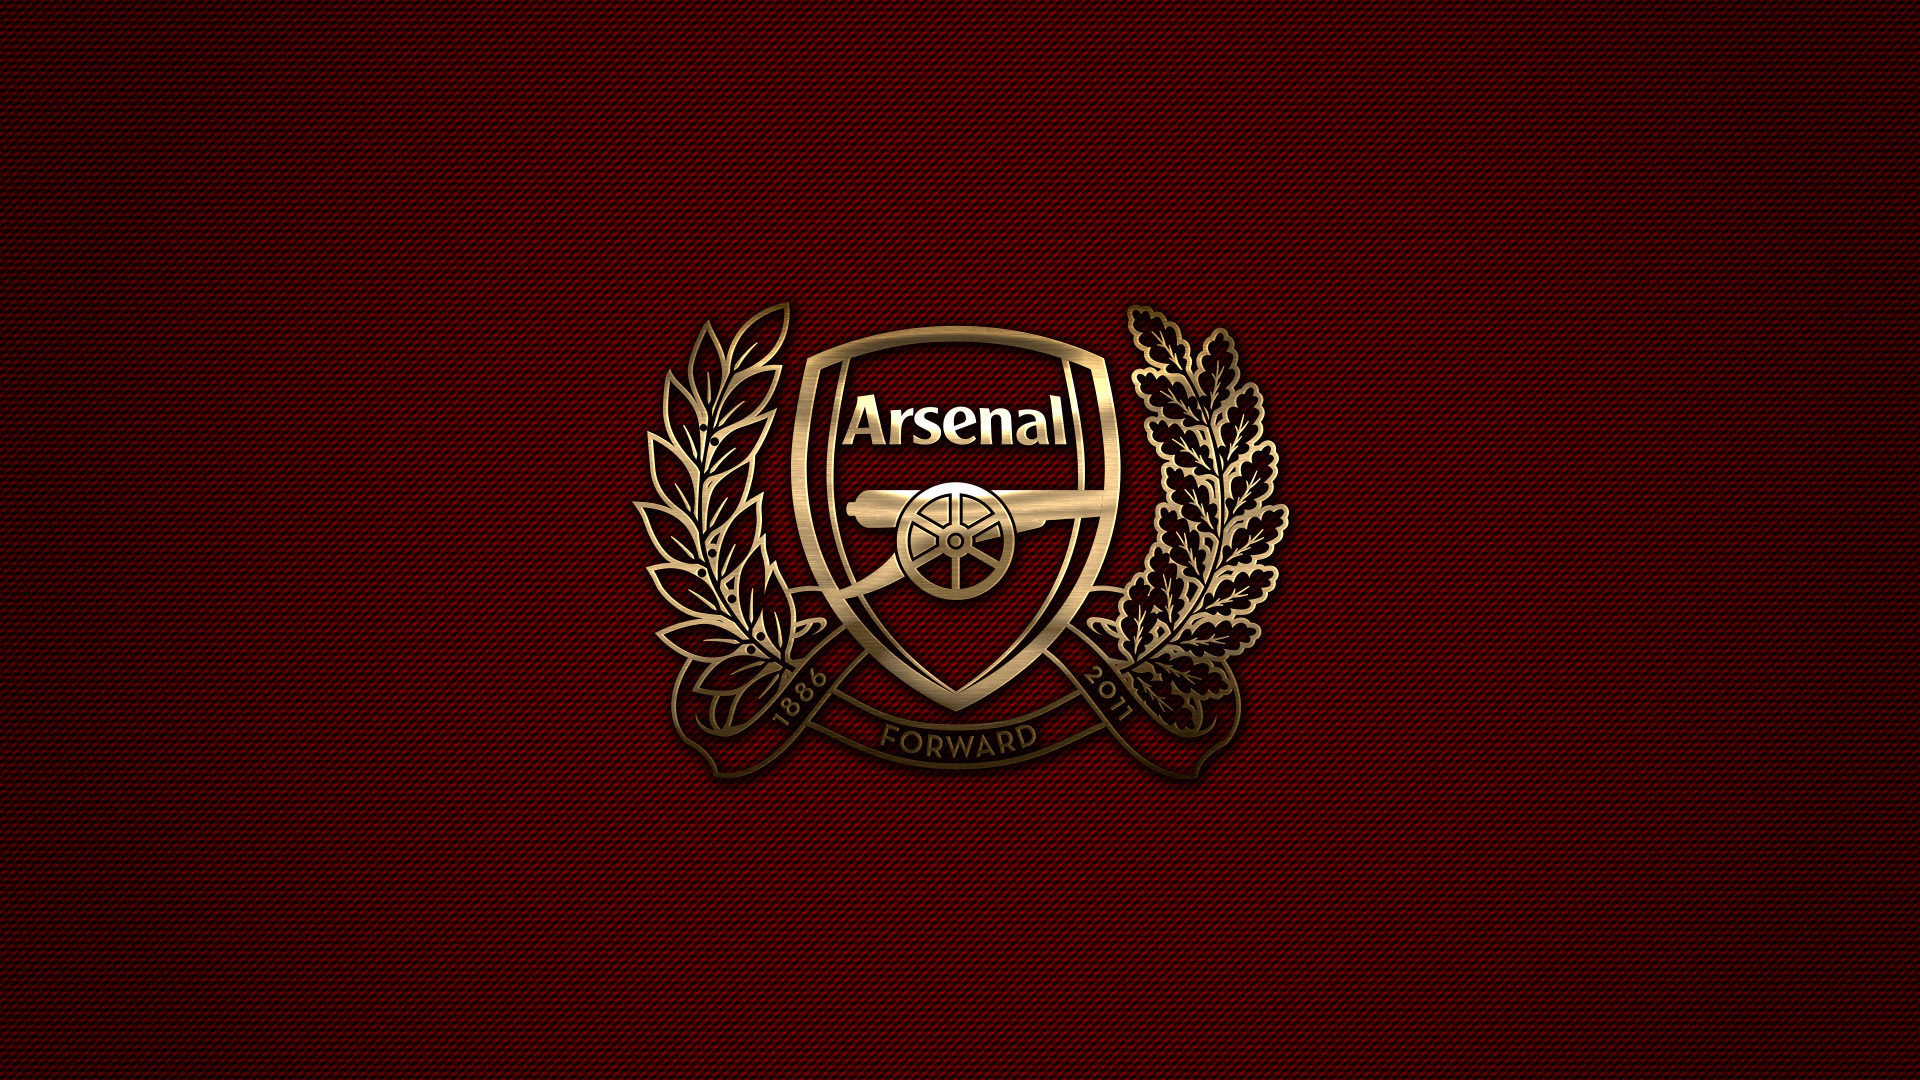 Arsenal Fc #426544 | Full HD Widescreen wallpapers for desktop ...